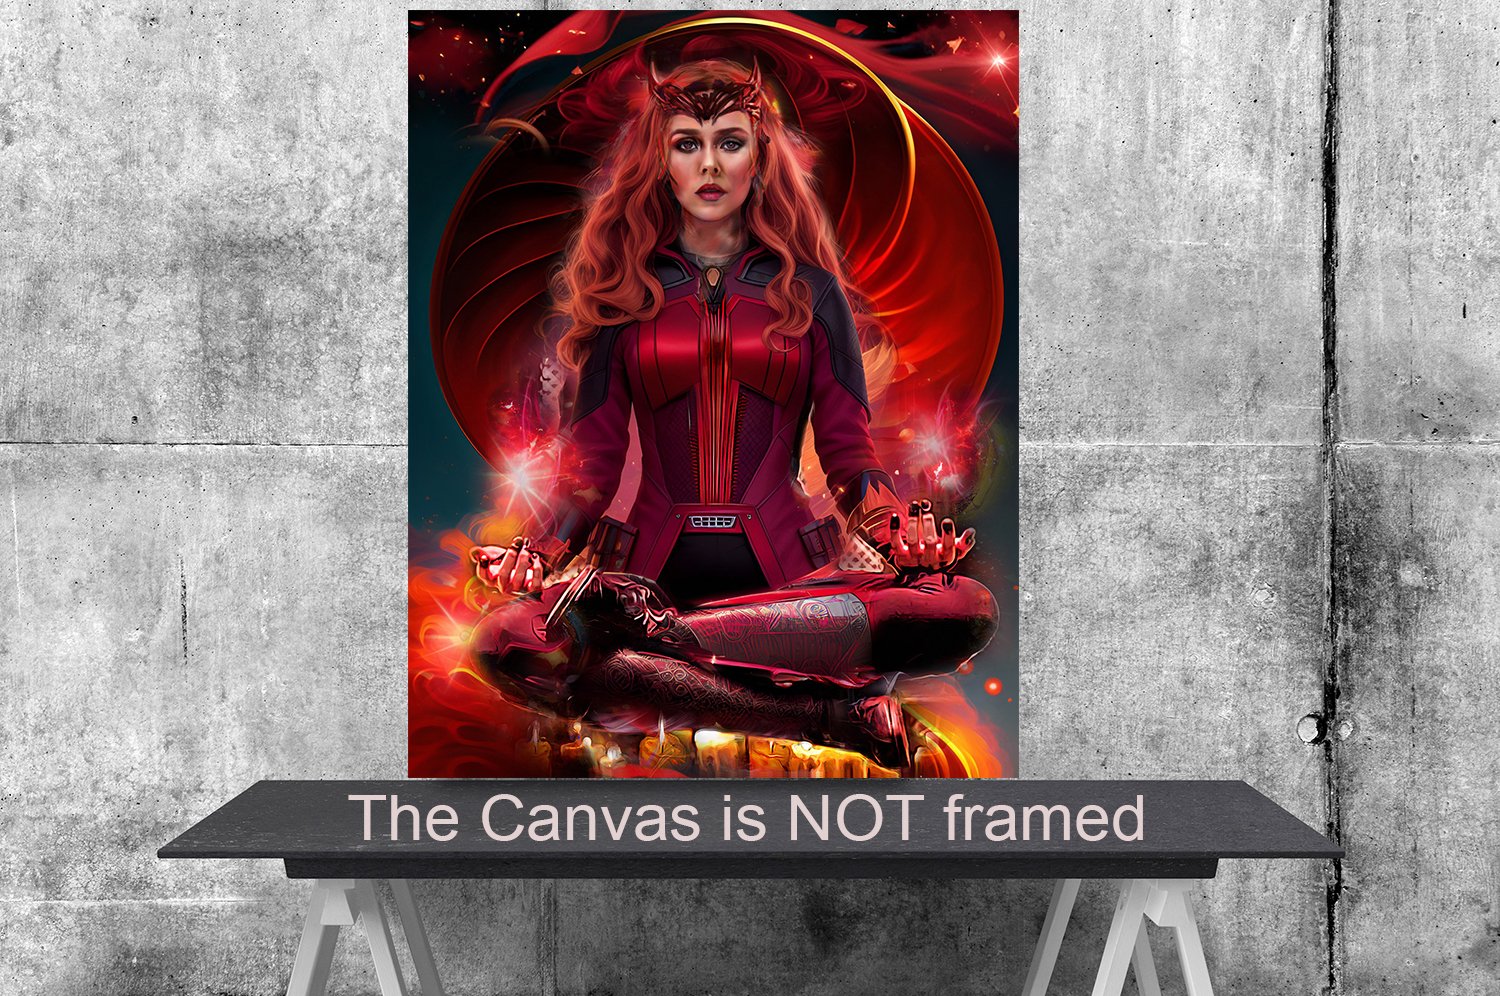 Wanda Vision, Scarlet Witch, Wanda Maximoff 24x29 inches Canvas Print